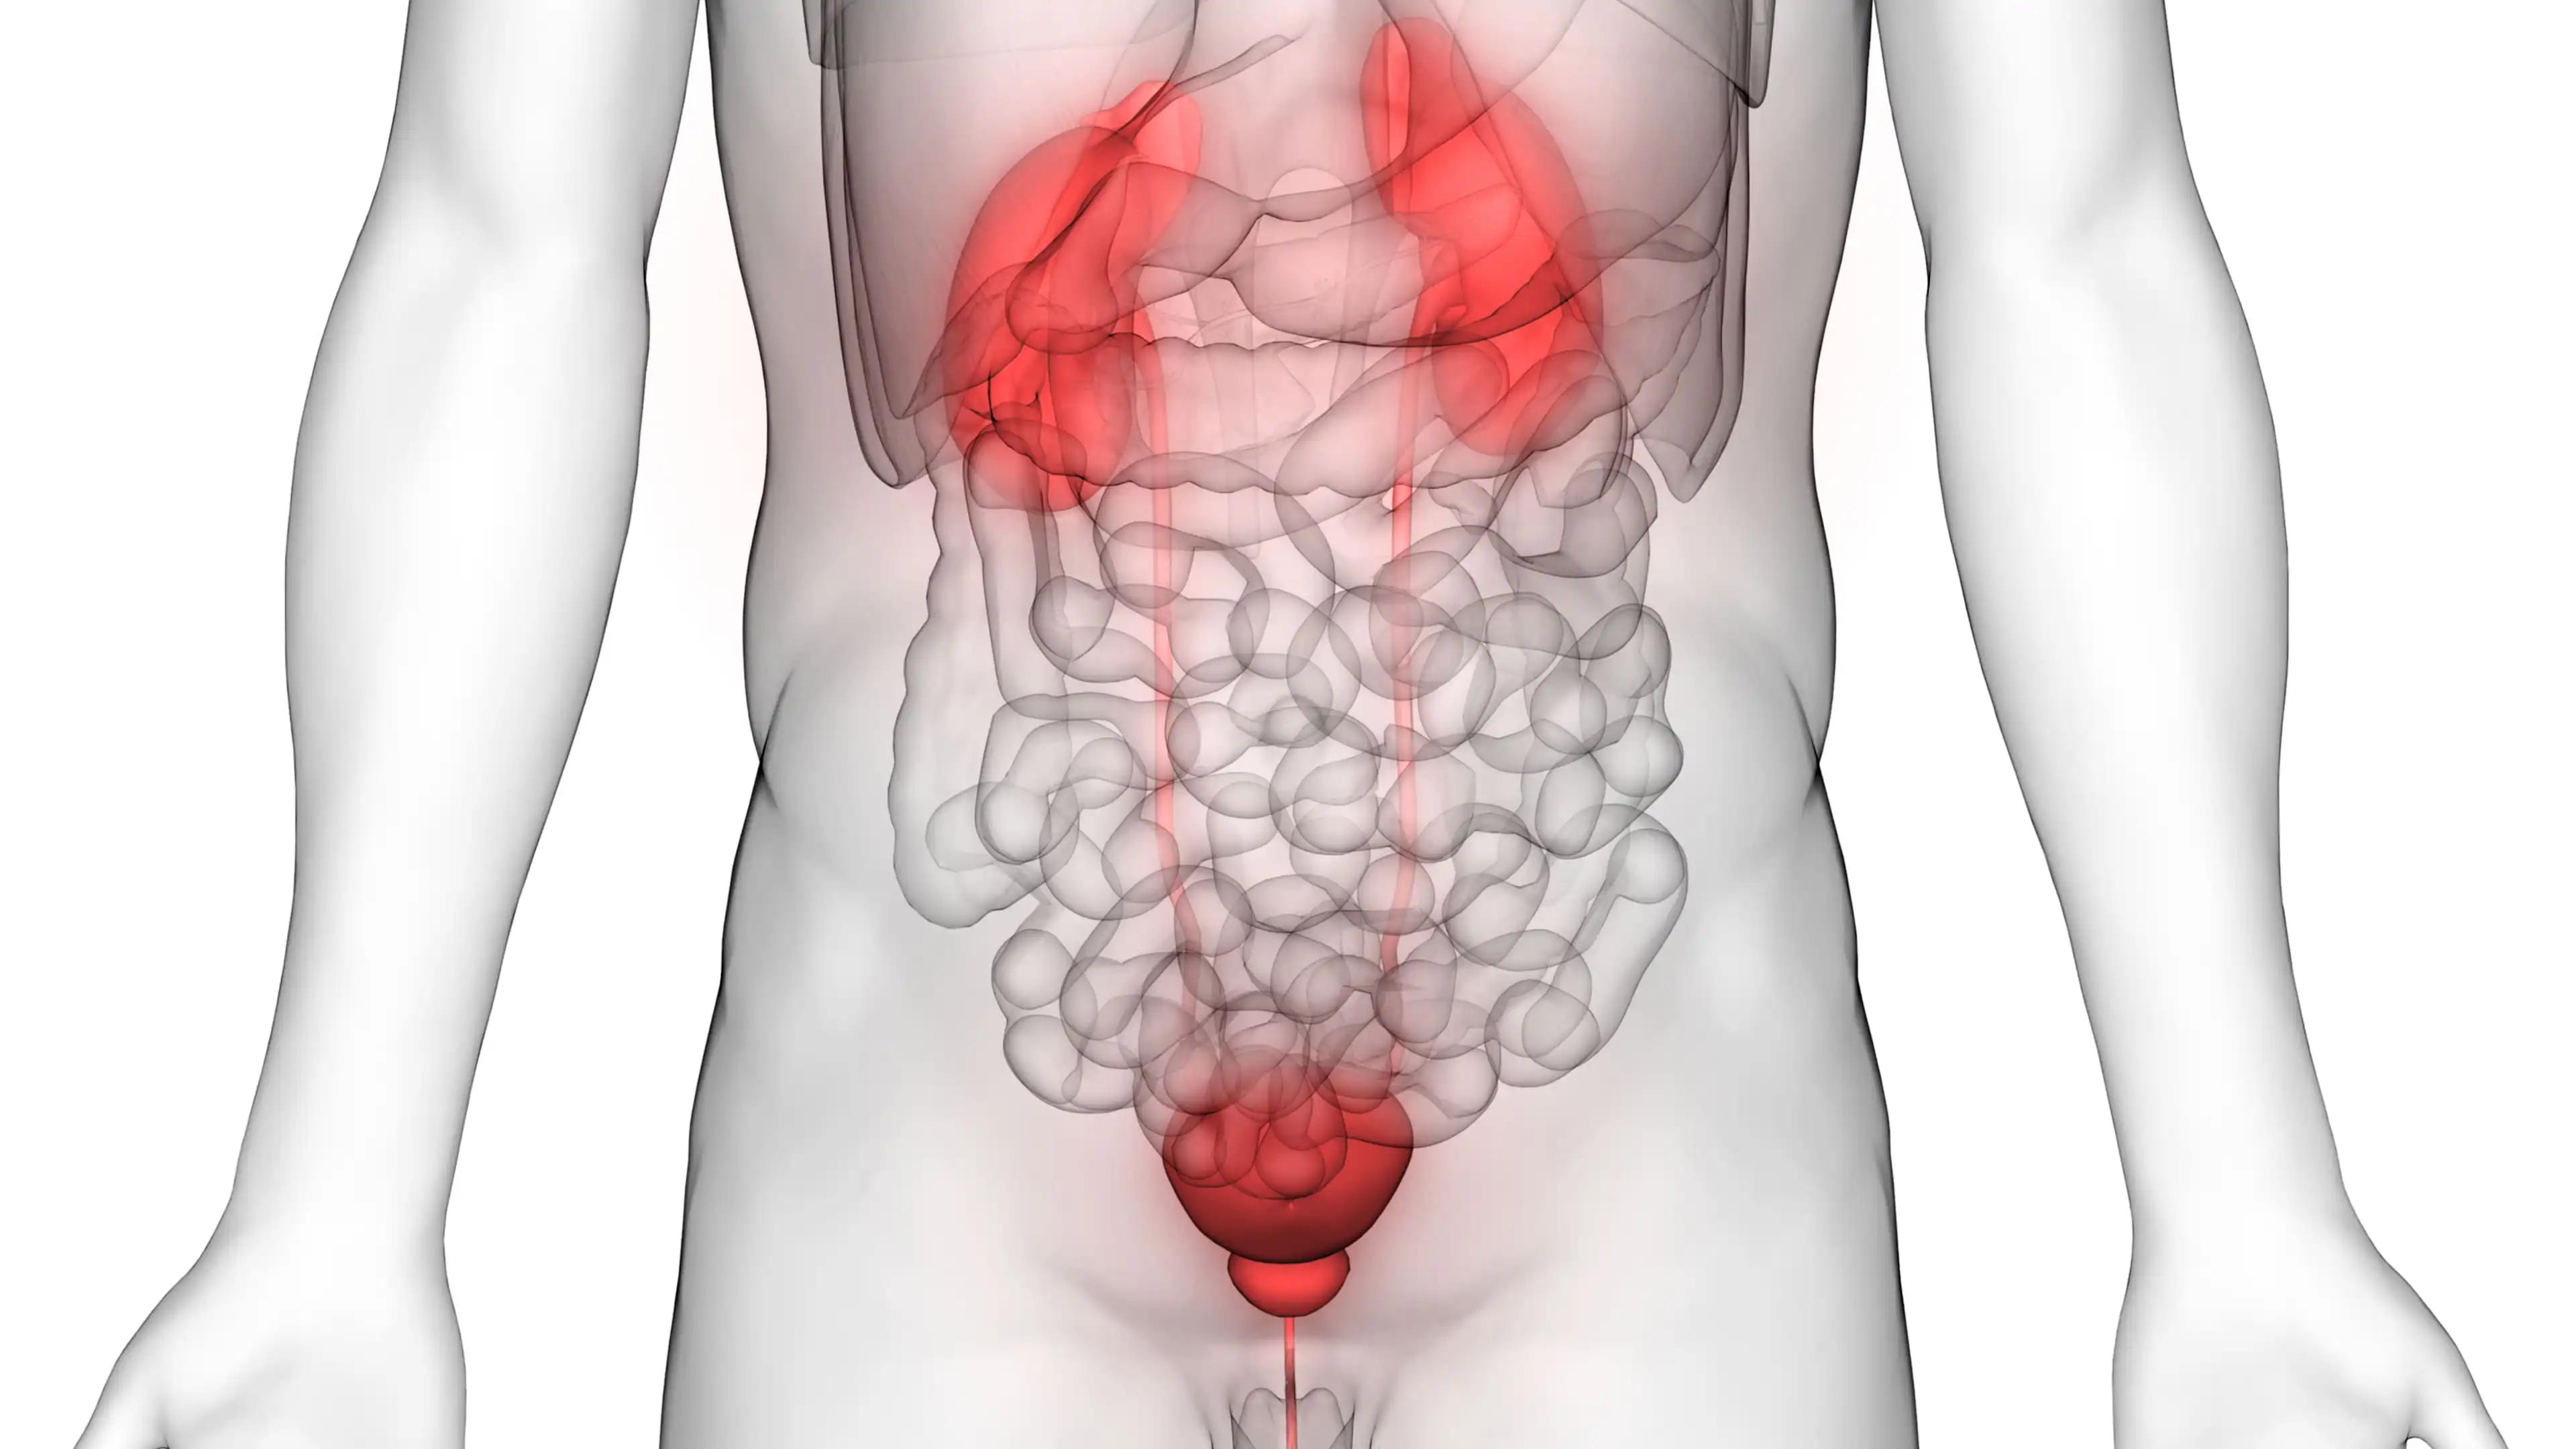 Kidneys with Urinary Bladder